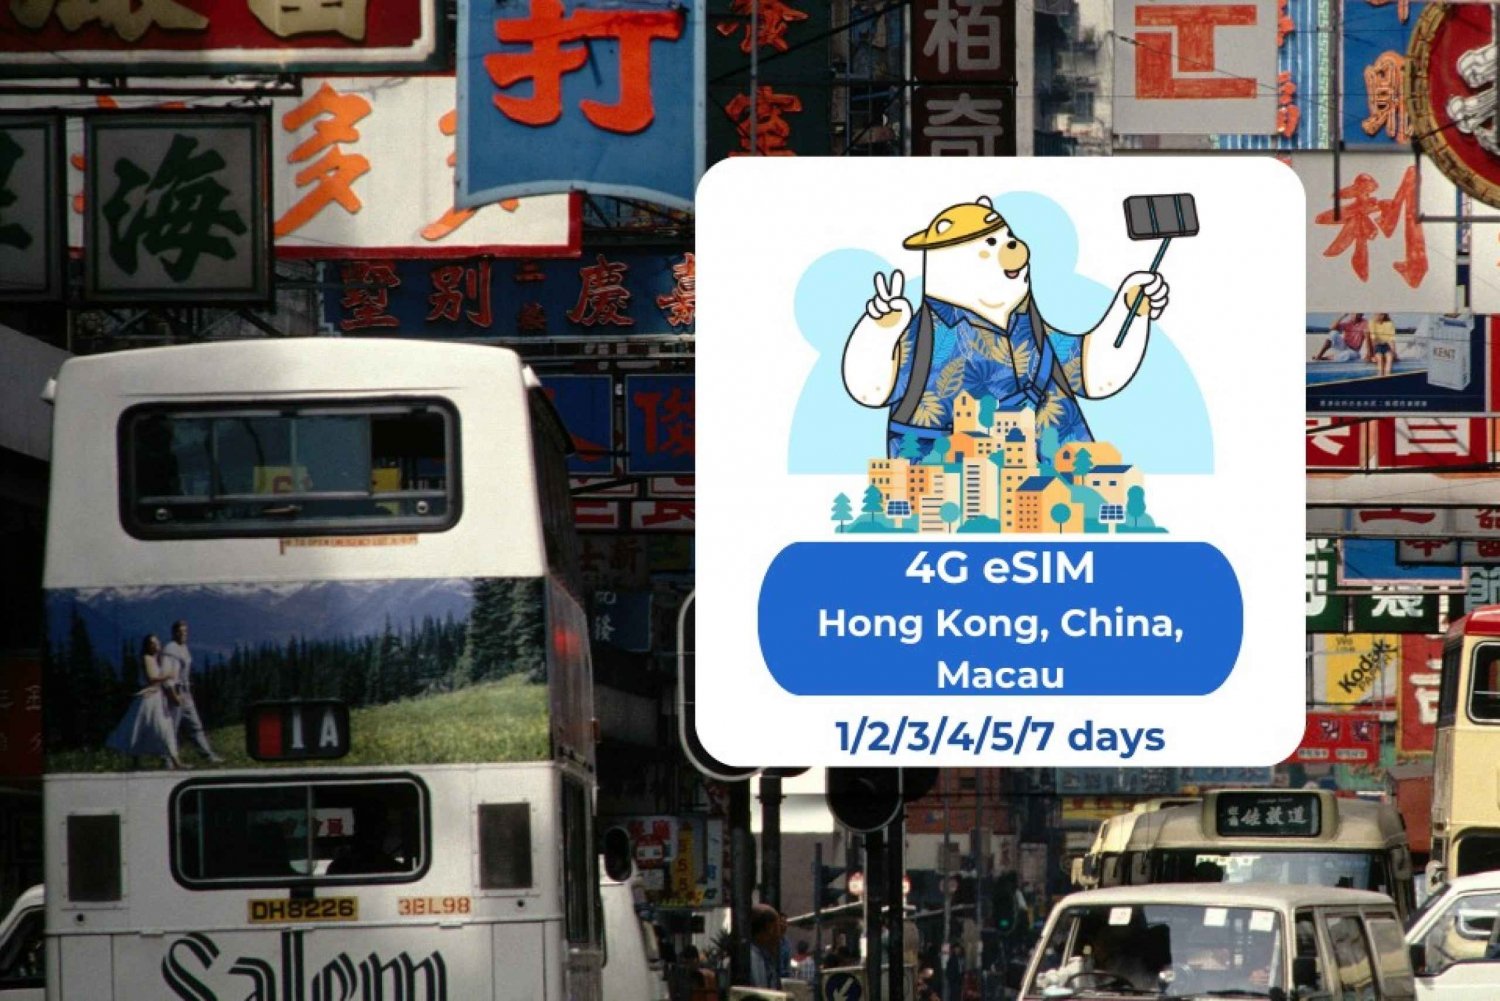 Hong Kong - China - Macau: eSIM Mobile Data 1/2/3/4/5/7 days